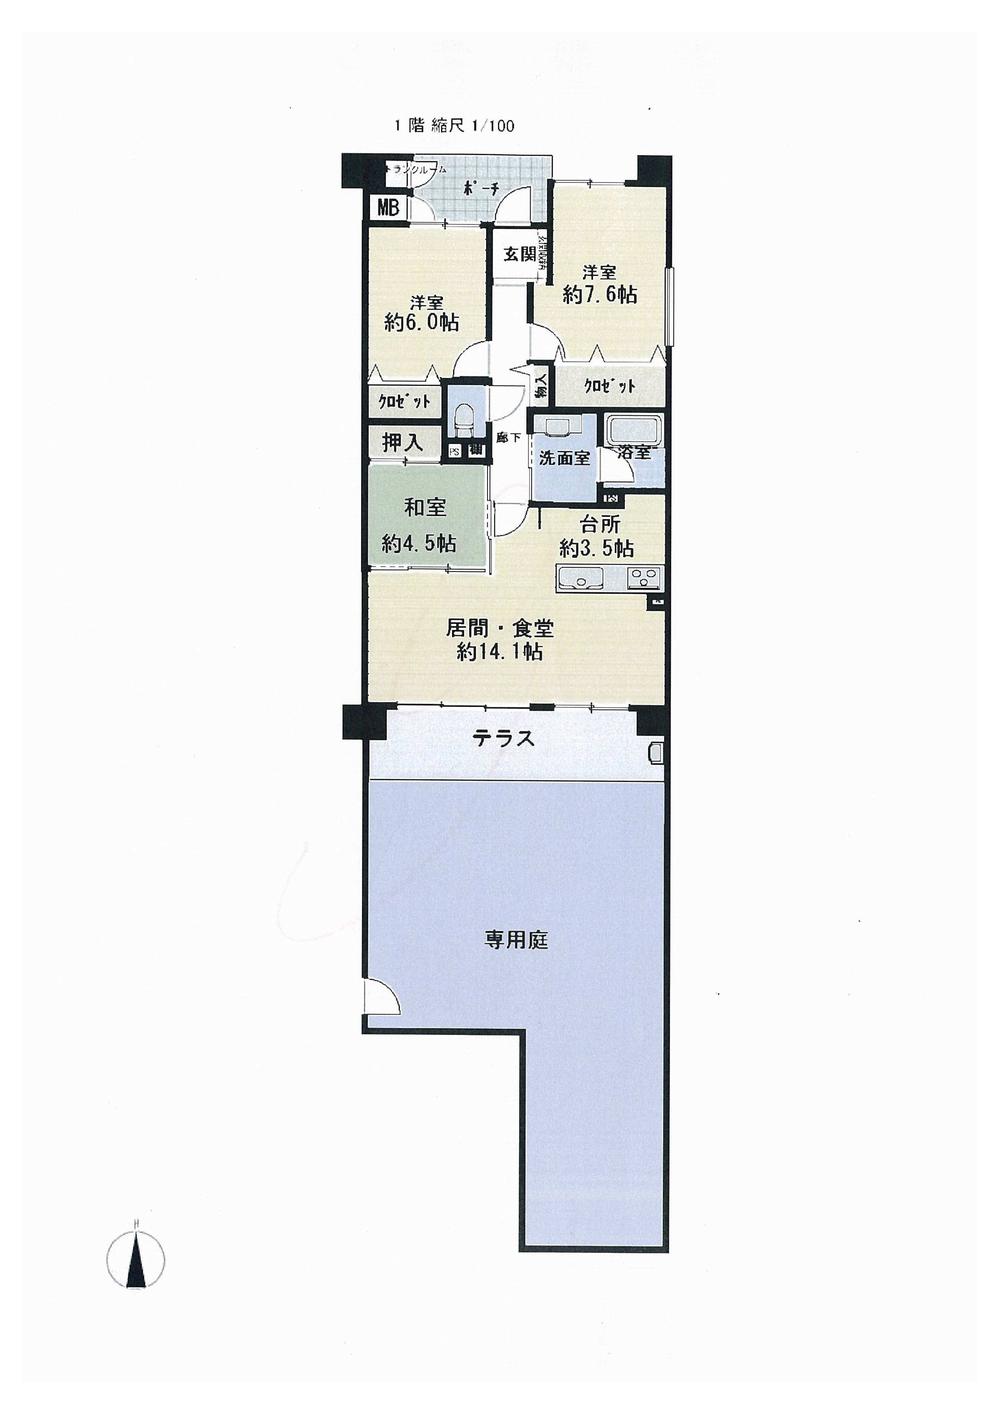 Floor plan. 3LDK, Price 26.2 million yen, Occupied area 81.24 sq m